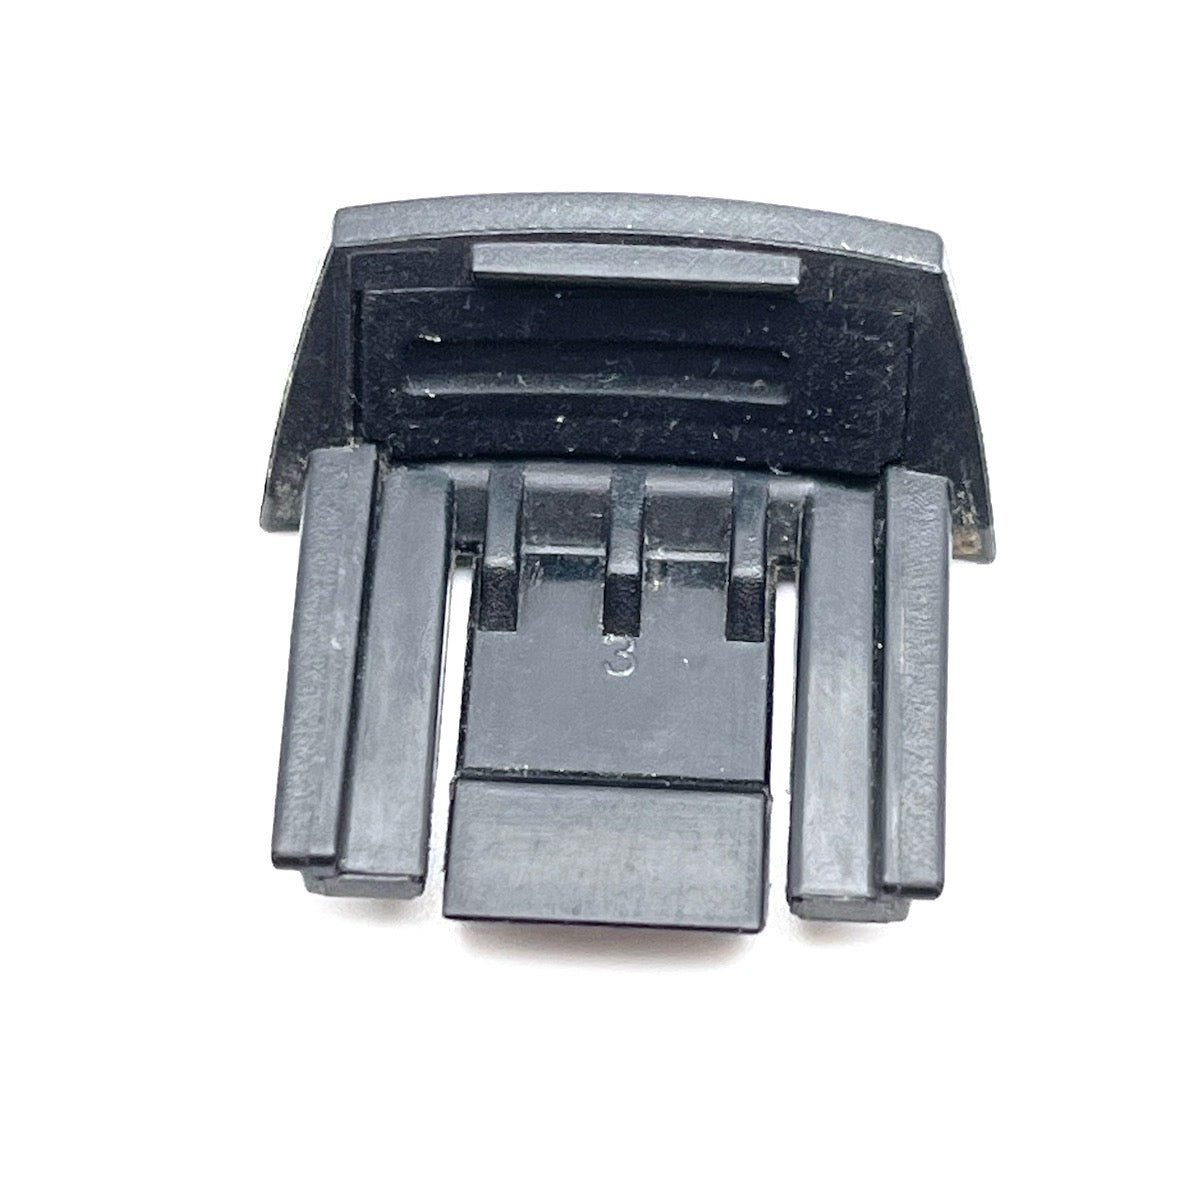 Used Cover MicroSD for Garmin EDGE 705 605 replacement part repair